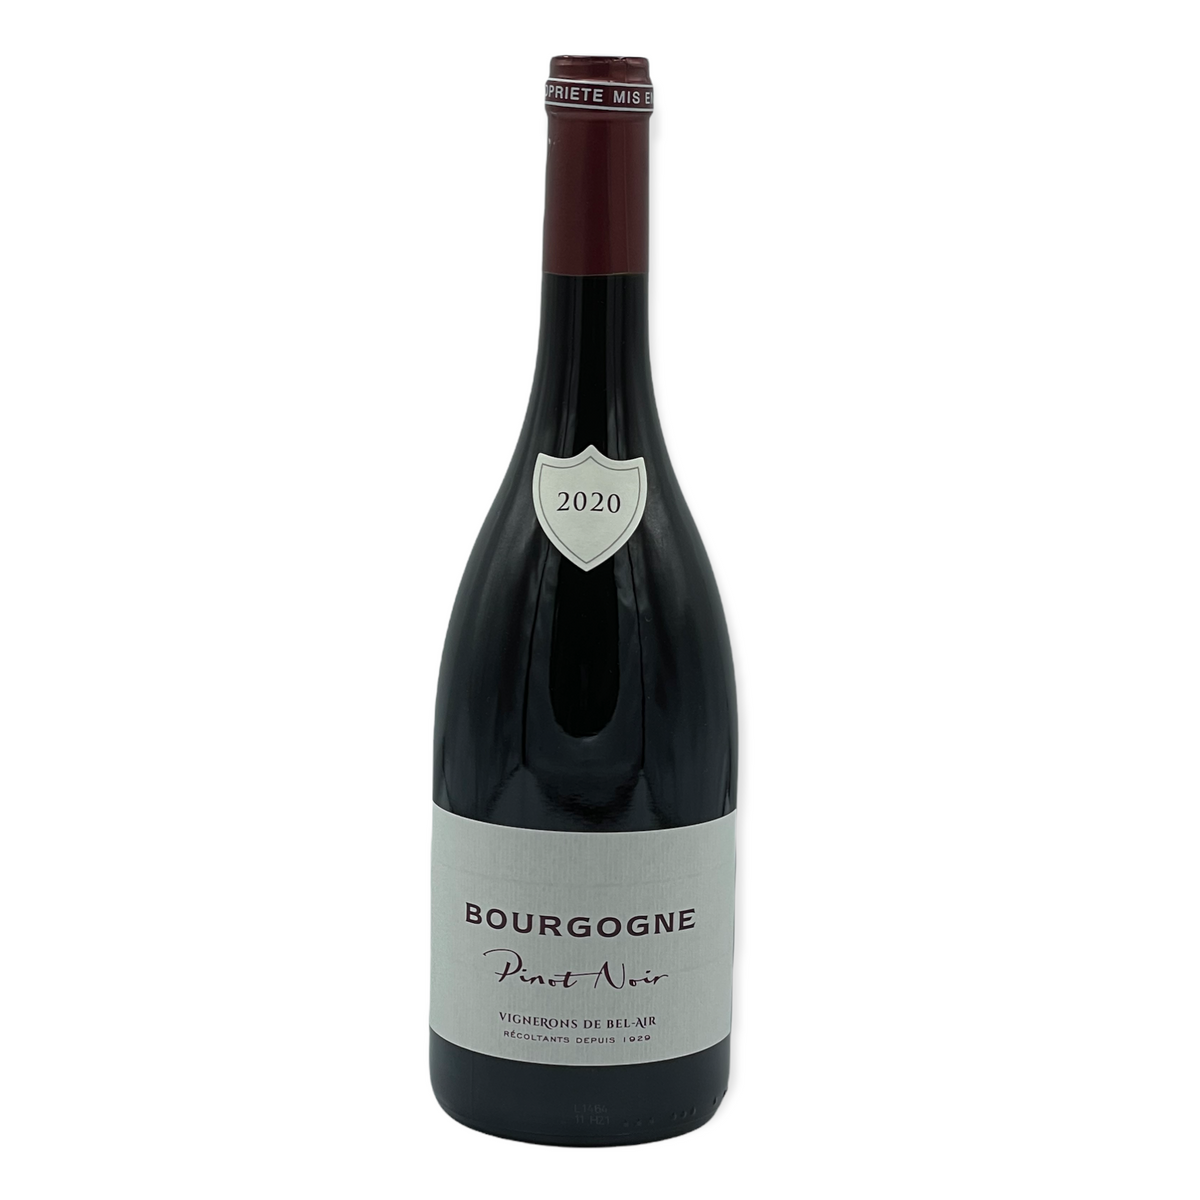 Vignerons de Bel Air - Bourgogne Pinot Noir 2020